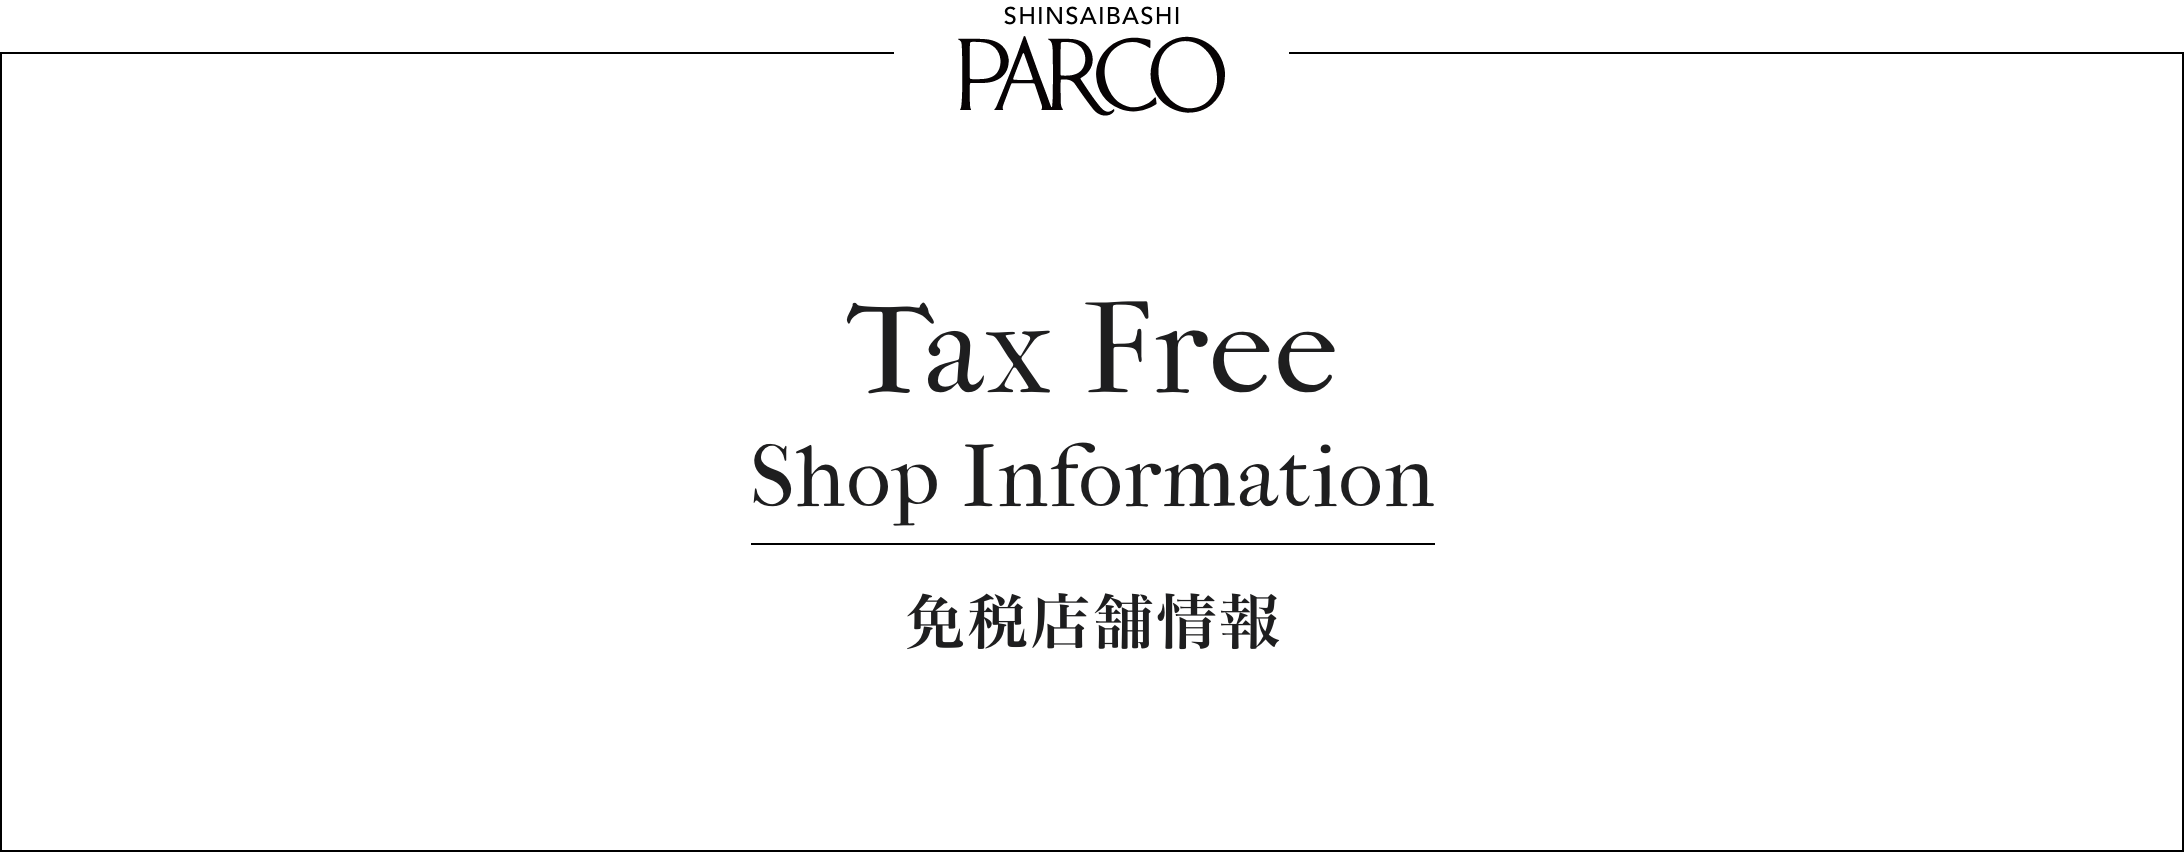 Tax Free Shop Information